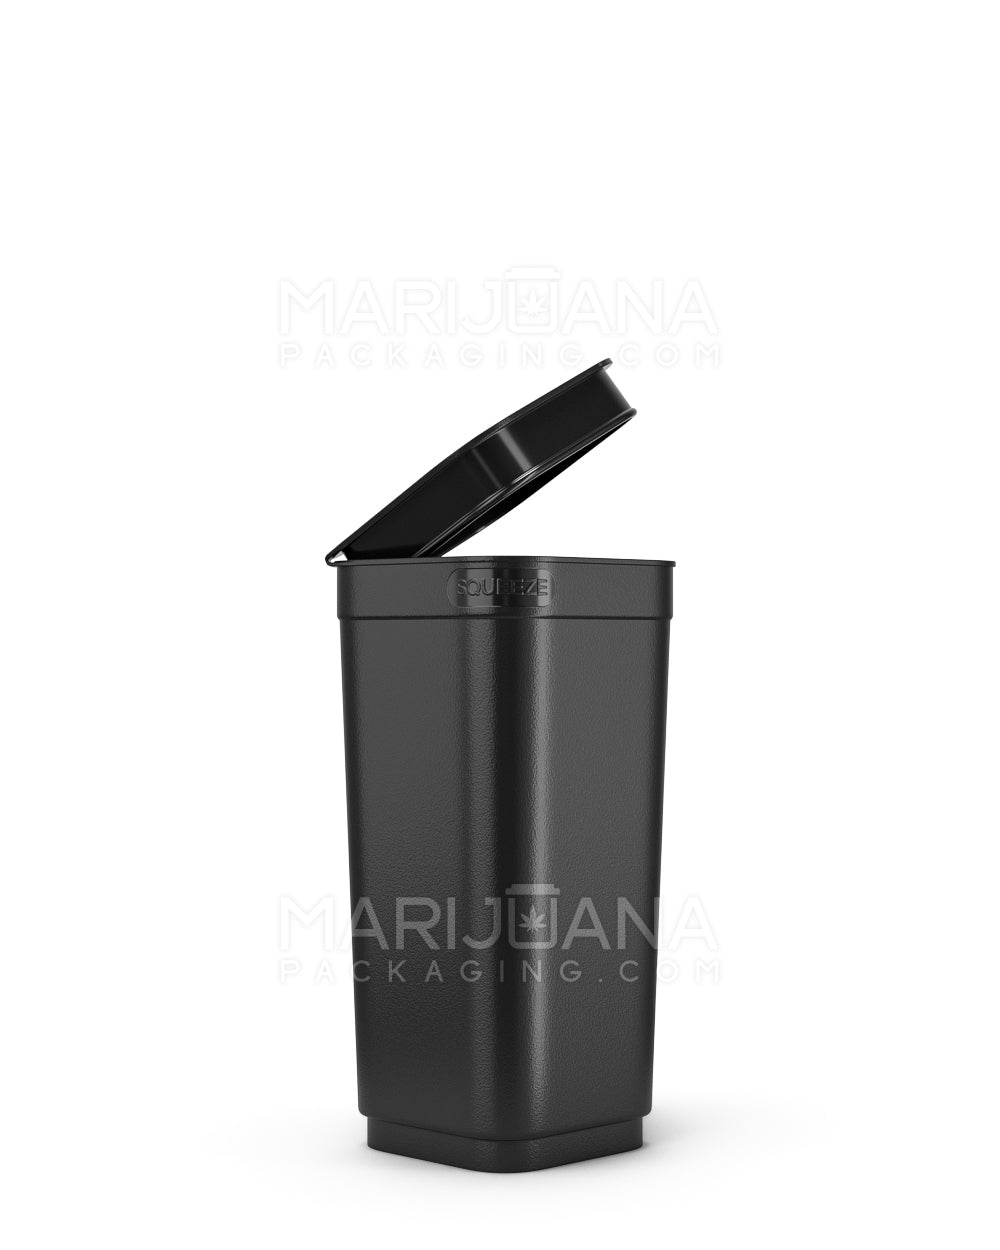 POLLEN GEAR 100% Recyclable Opaque Black Pop Box Pop Top Bottles | 30dr - 7g | Sample